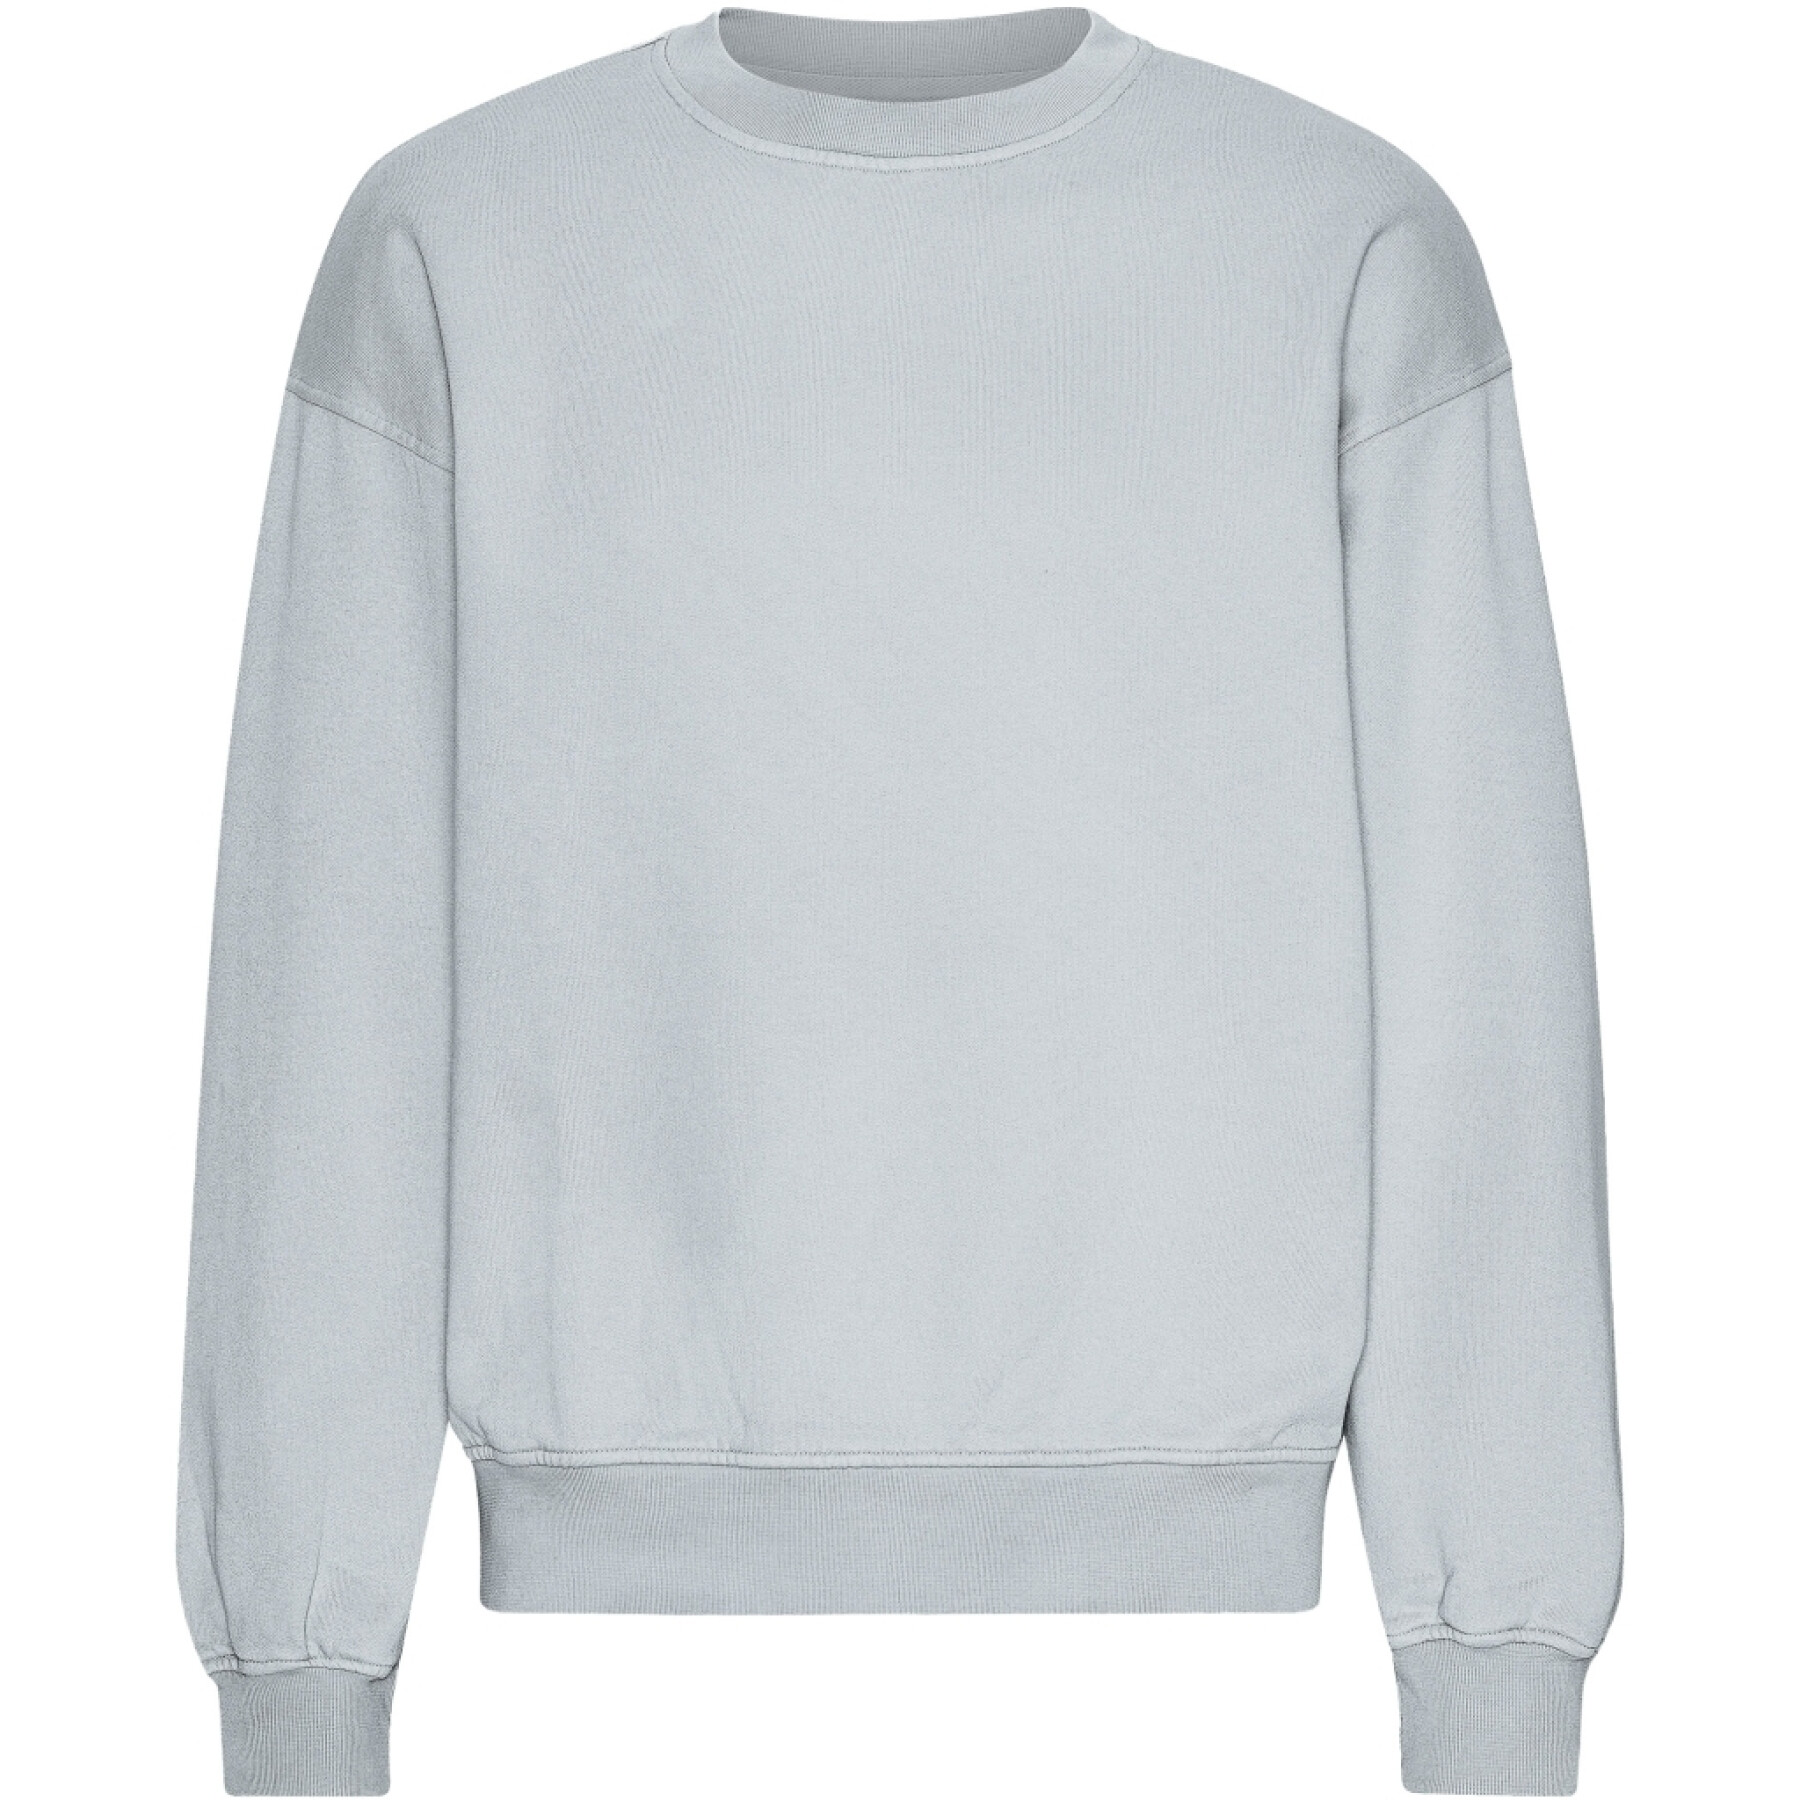 Oversized sweatshirt met ronde hals Colorful Standard Organic Cloudy Grey